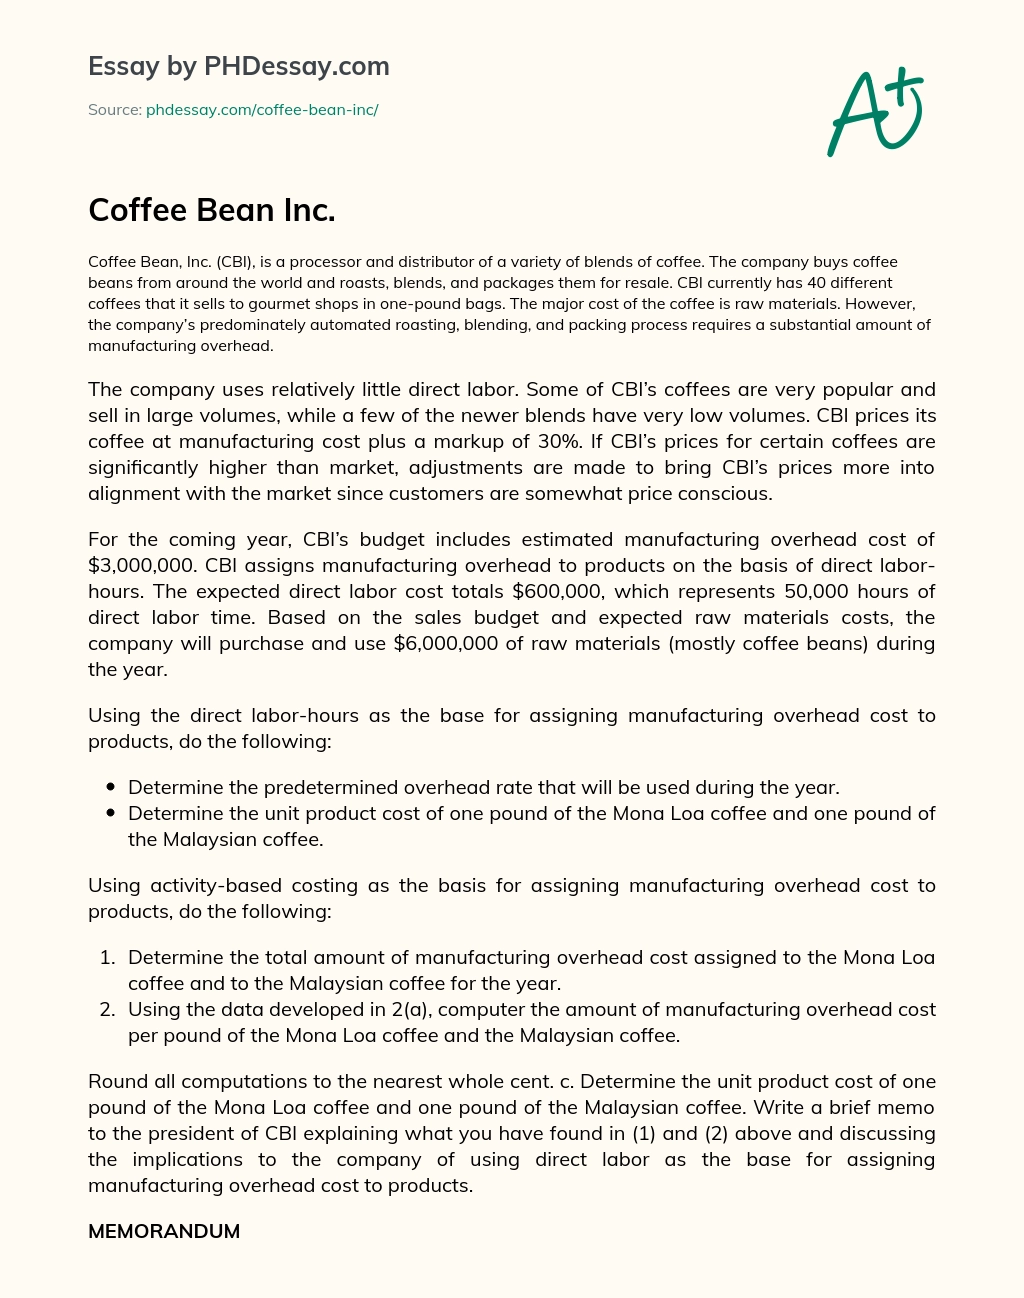 Coffee Bean Inc. essay